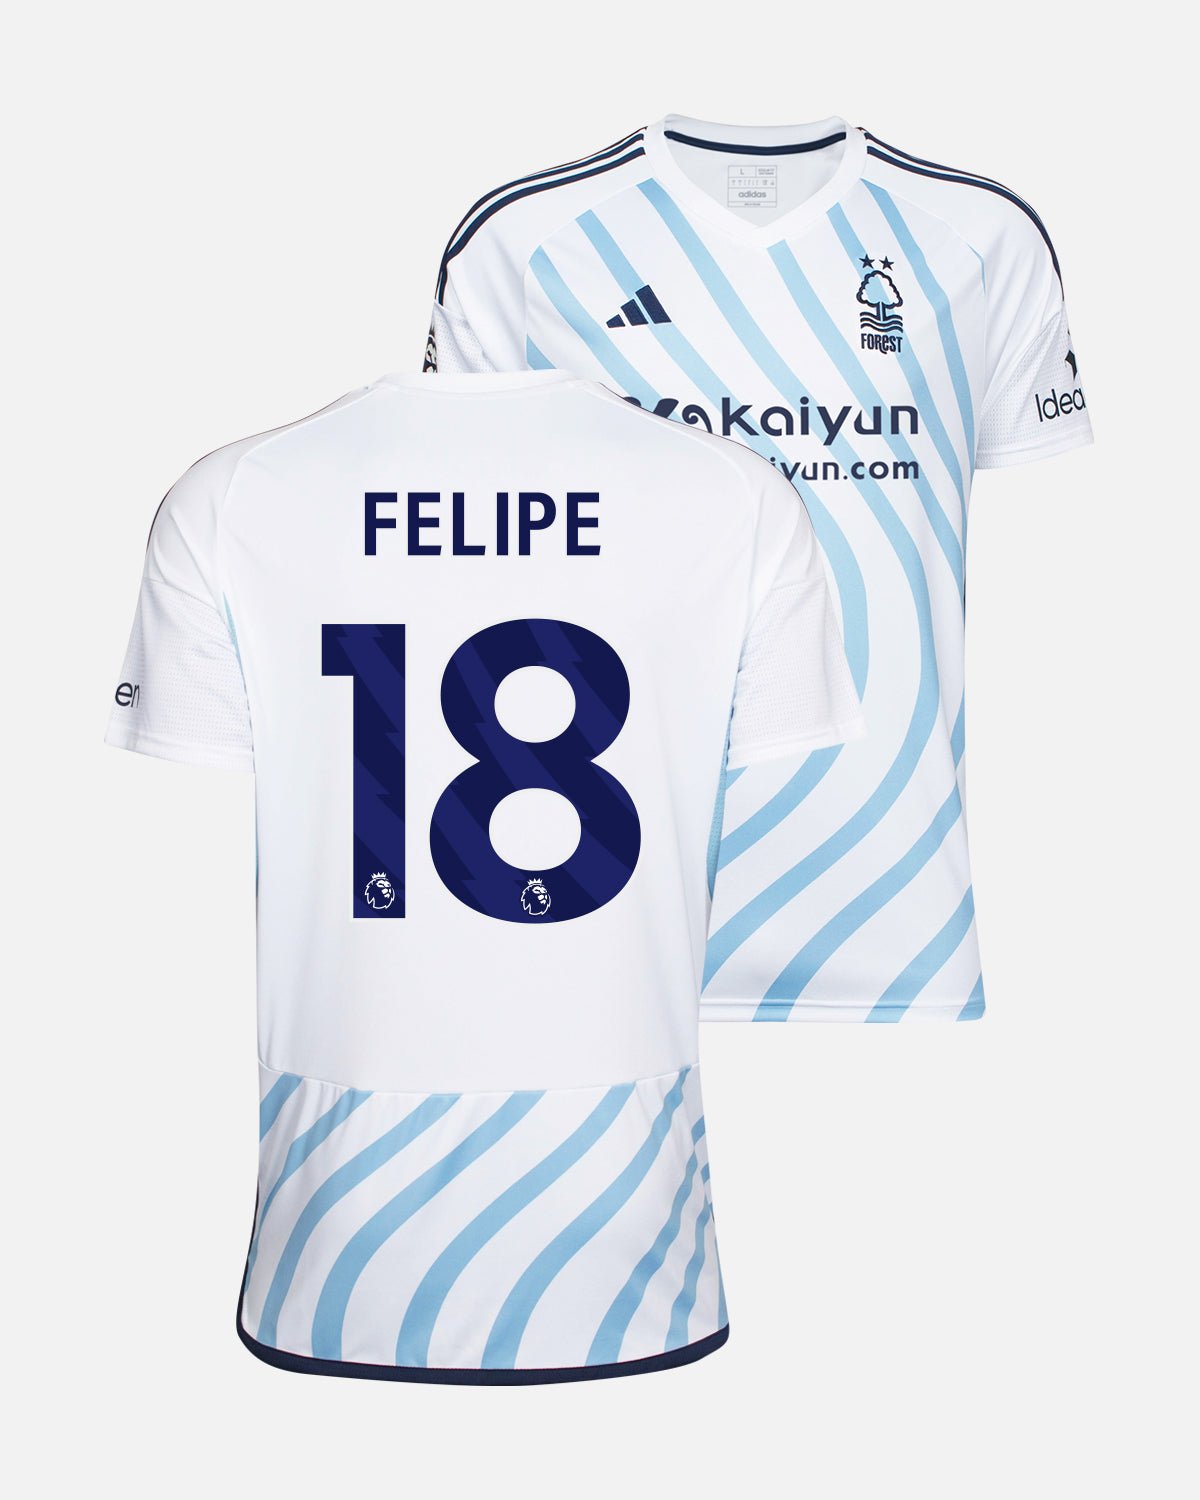 NFFC Away Shirt 23-24 - Felipe 18 - Nottingham Forest FC